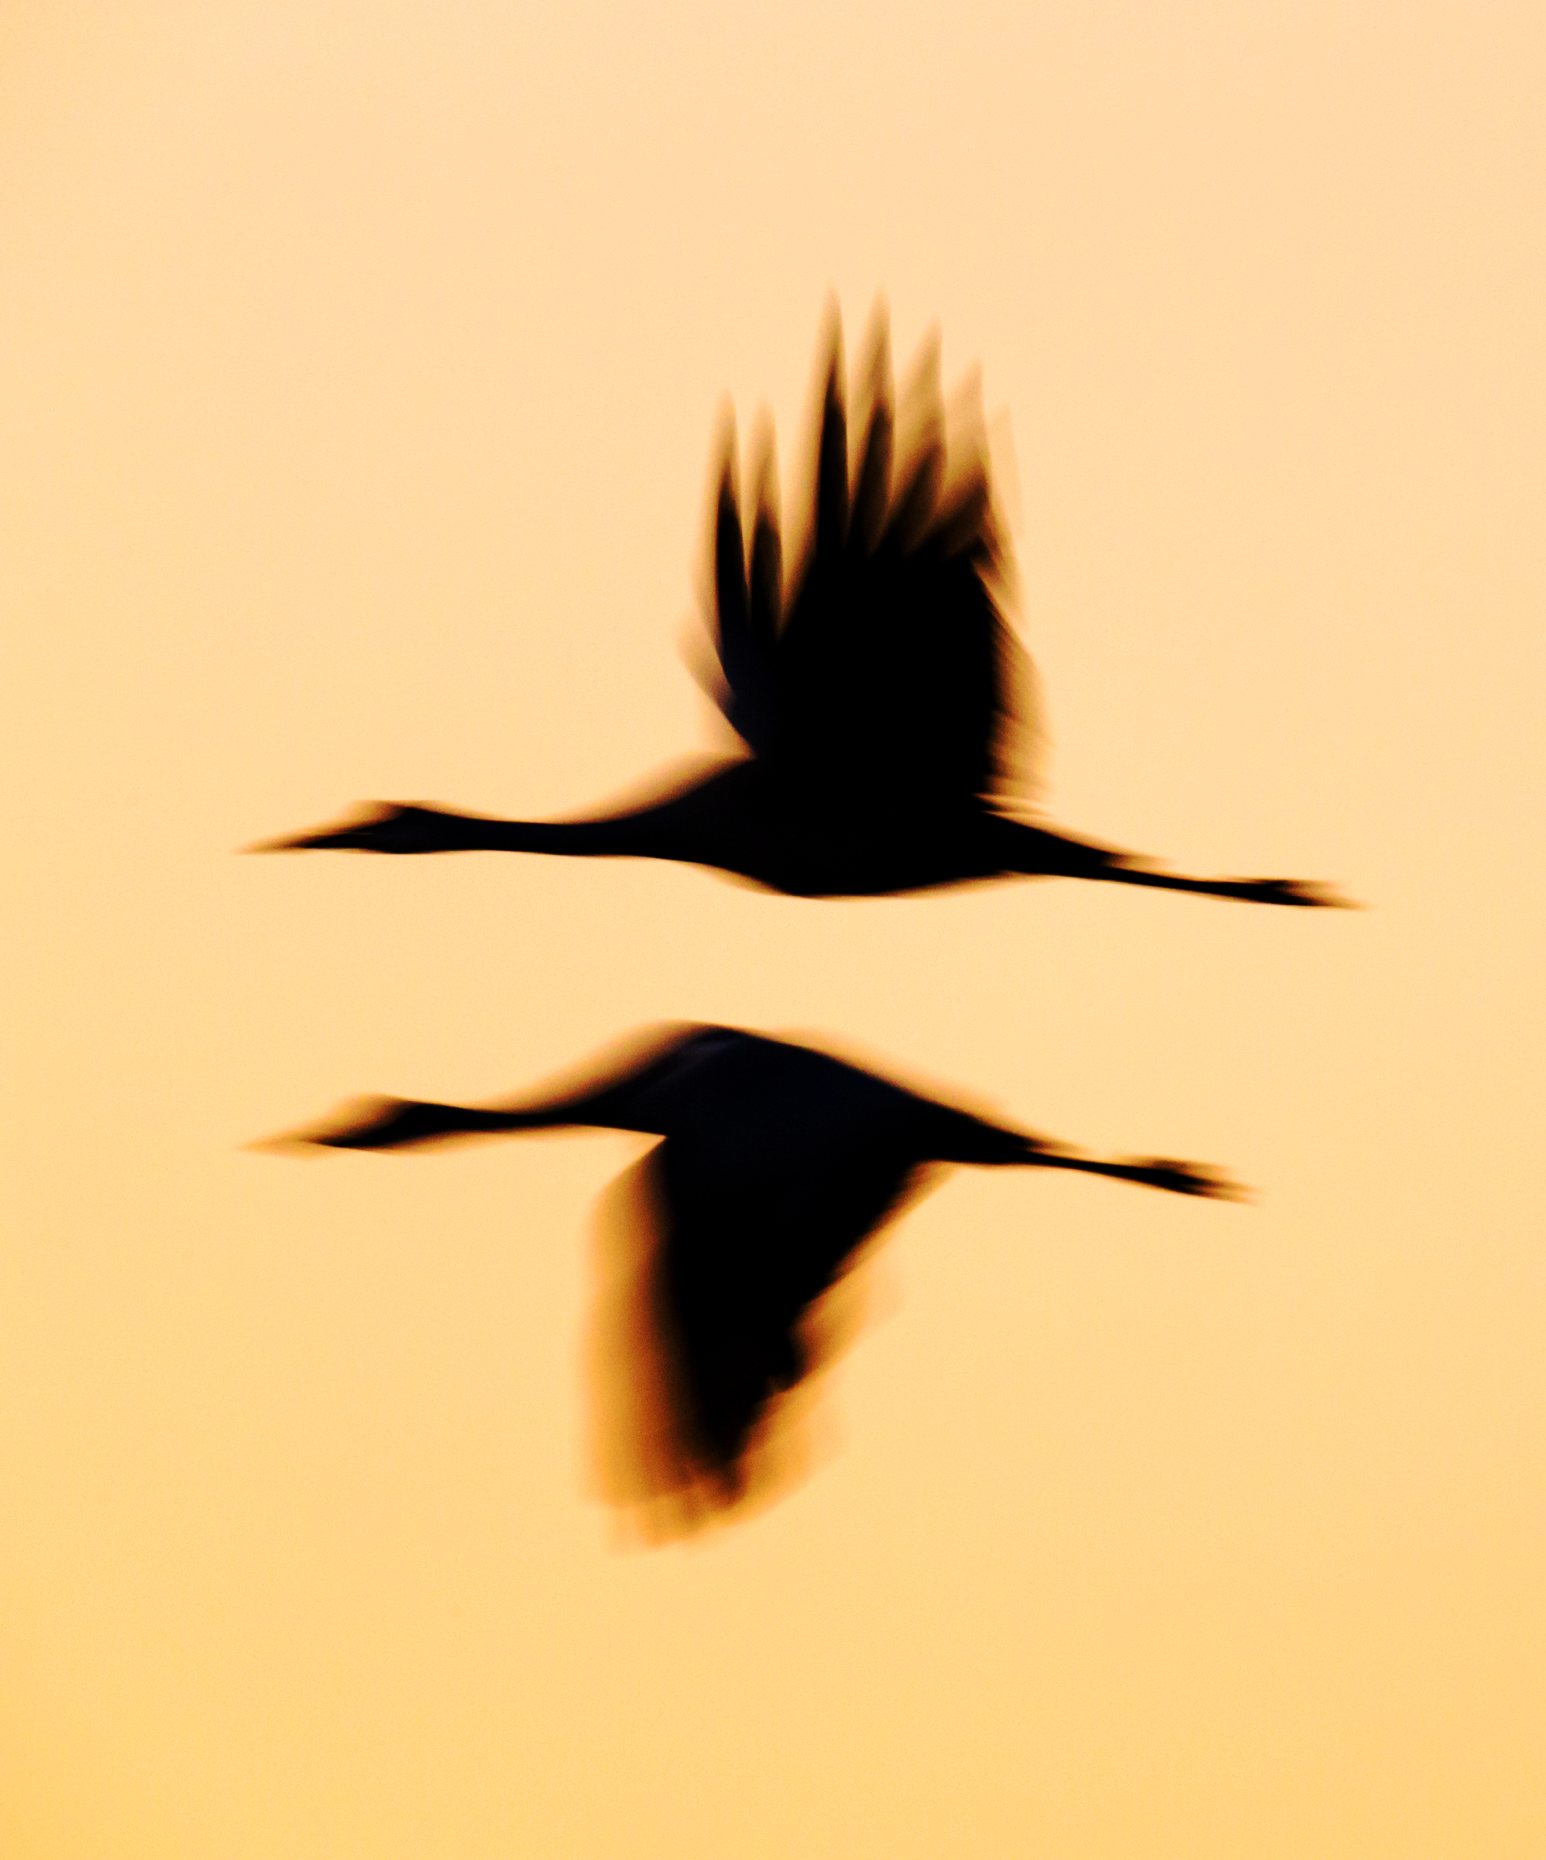 Pan - blur - motion photograph of Sandhill Cranes in flight at sunset, Monte Vista National Wildlife Refuge, Colorado, USA